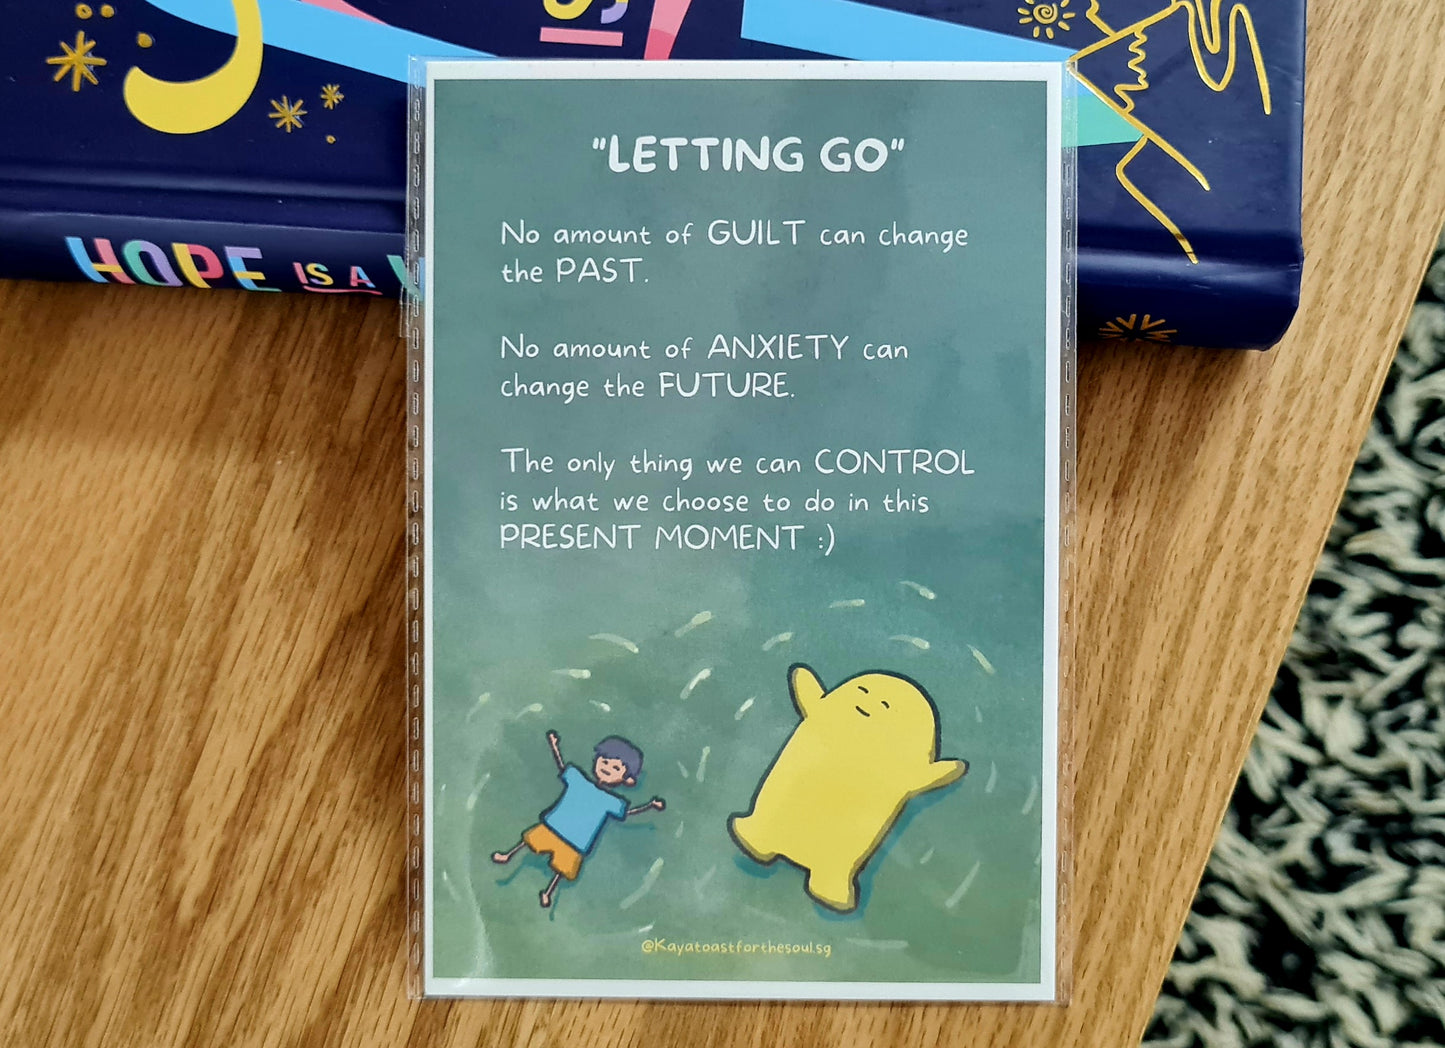 Kaya Toast Postcard  - "LET GO" by KAYA TOAST FOR THE SOUL